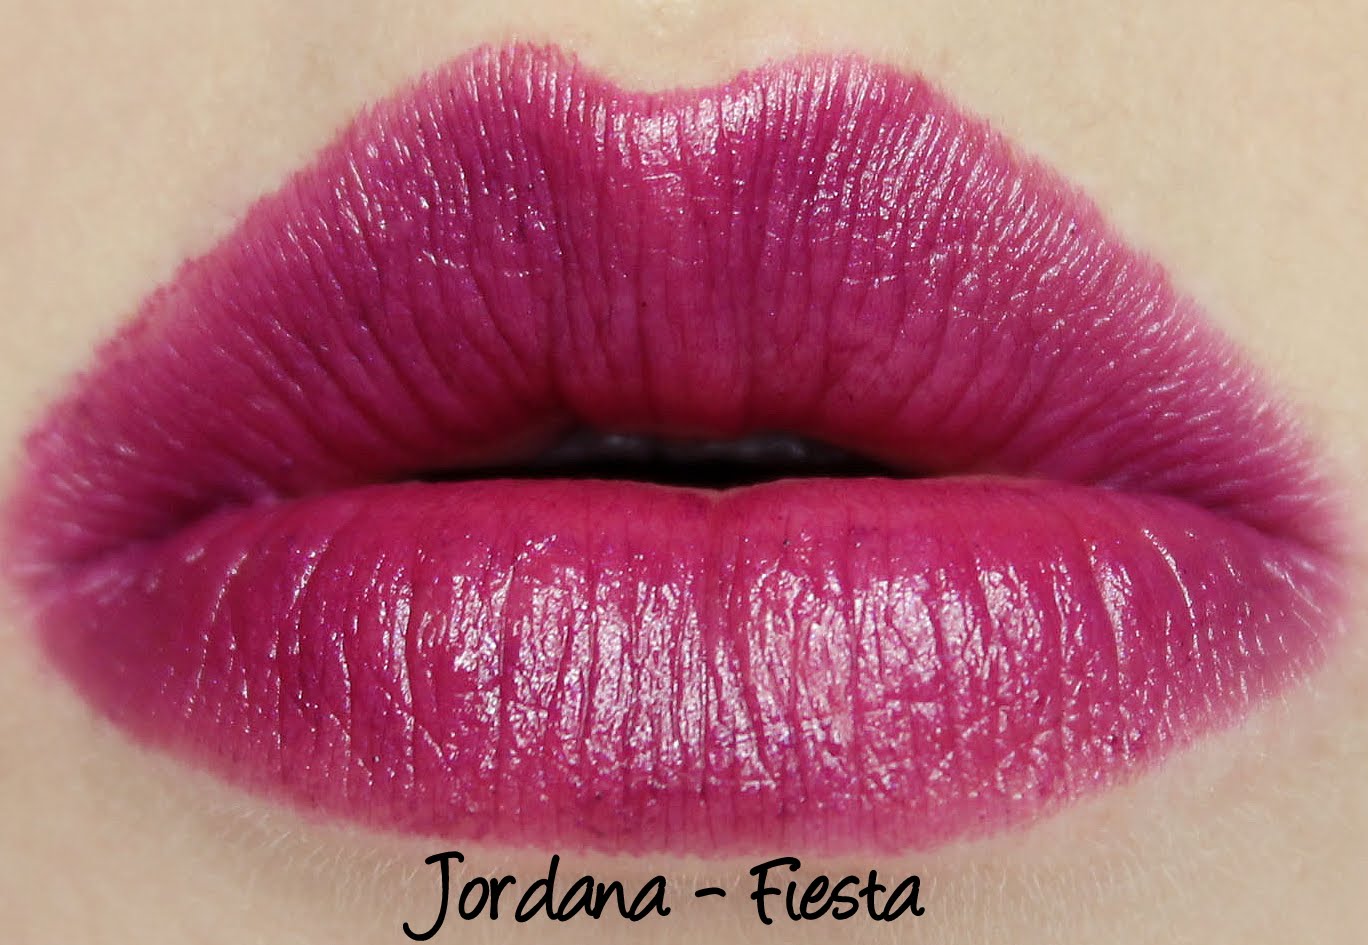 Jordana Lipsticks - Fiesta Swatches & Review